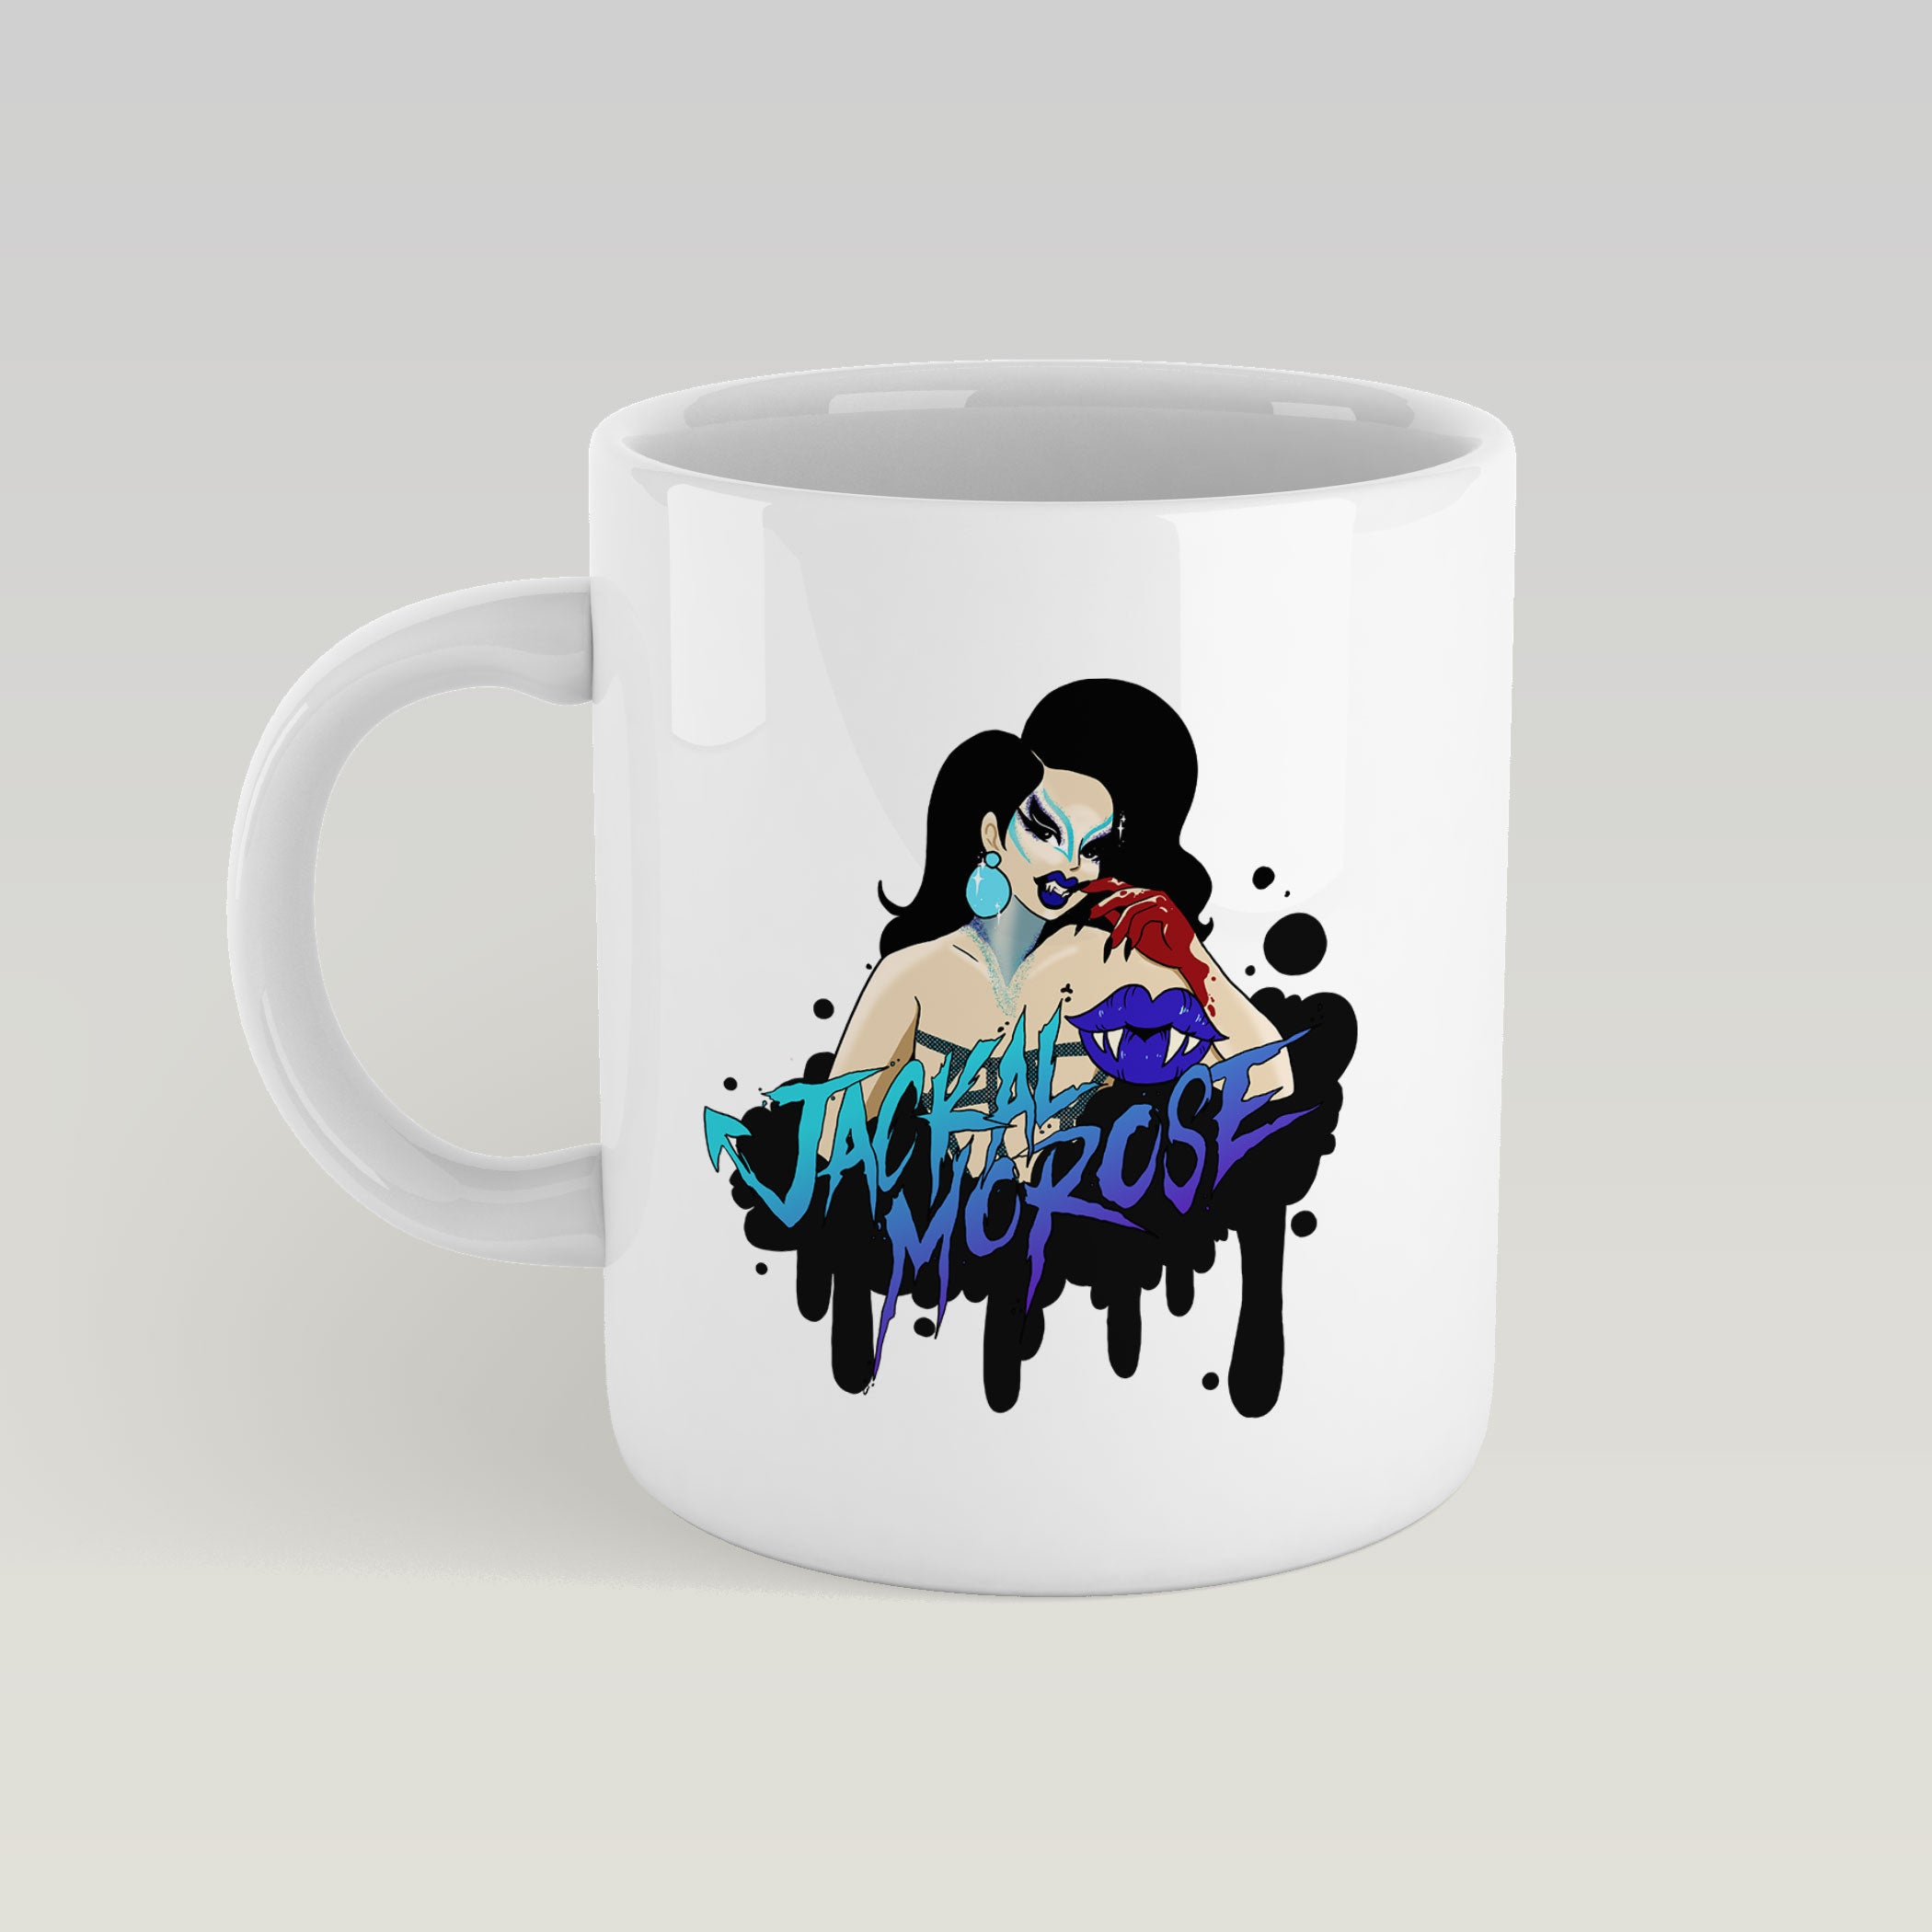 Jackal Morose - Logo Mug